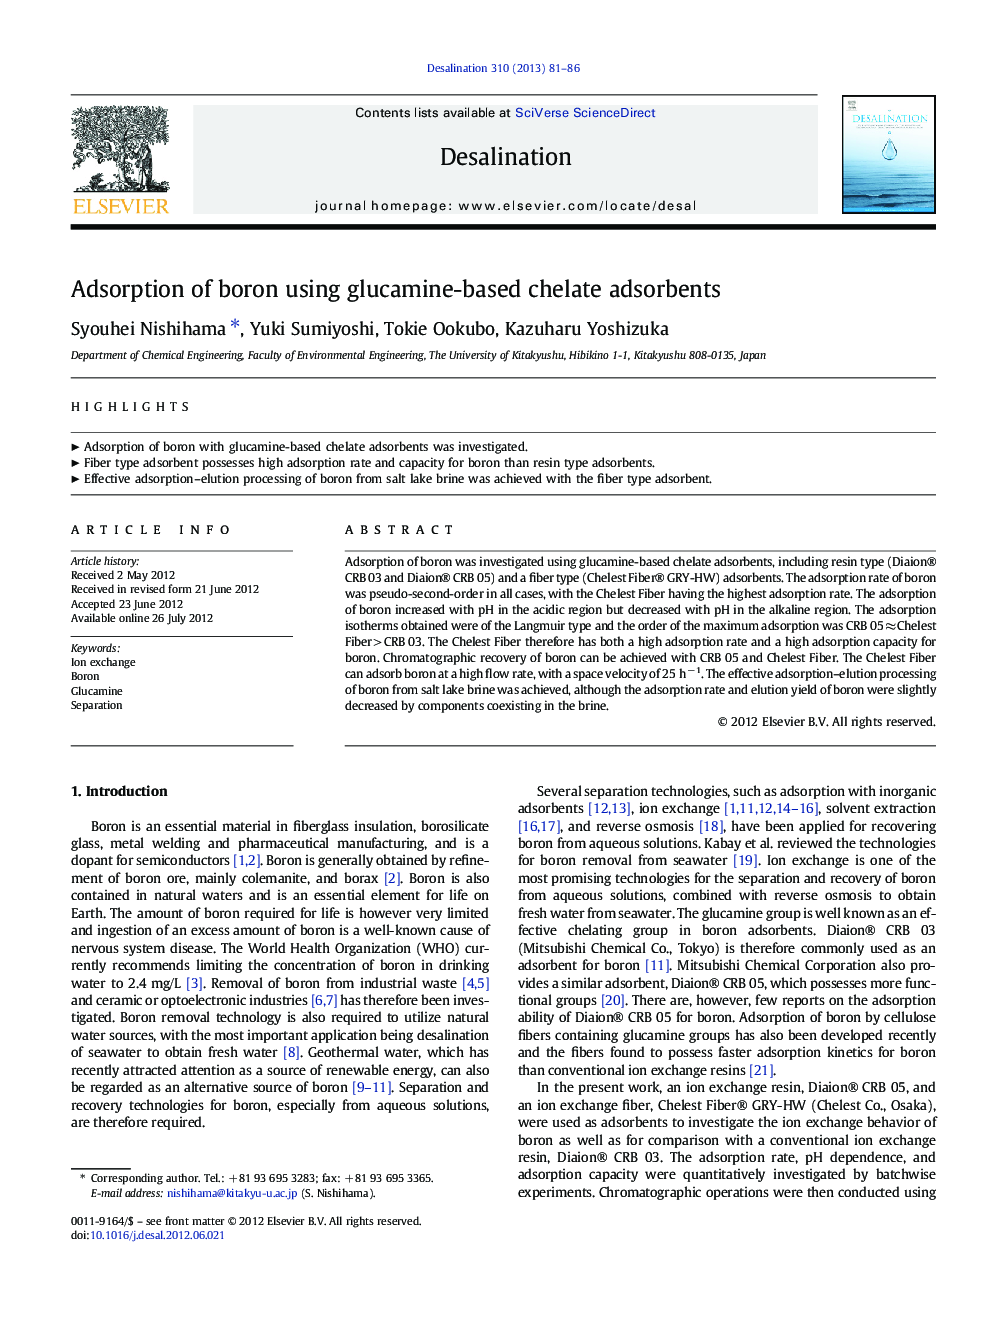 Adsorption of boron using glucamine-based chelate adsorbents